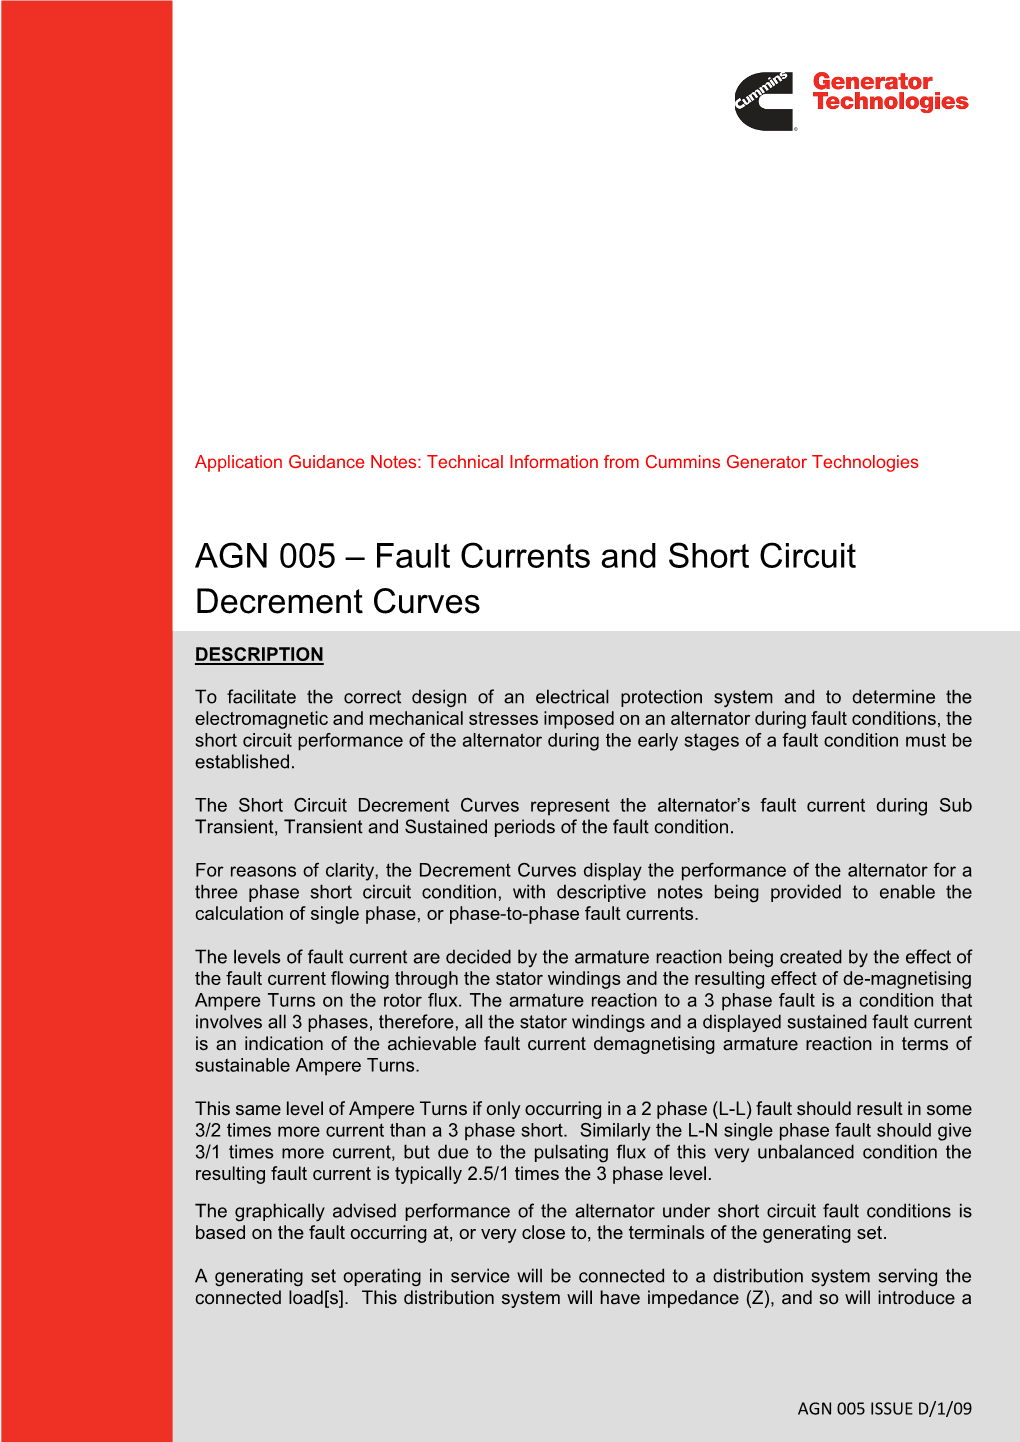 AGN 005 – Fault Currents and Short Circuit Decrement Curves